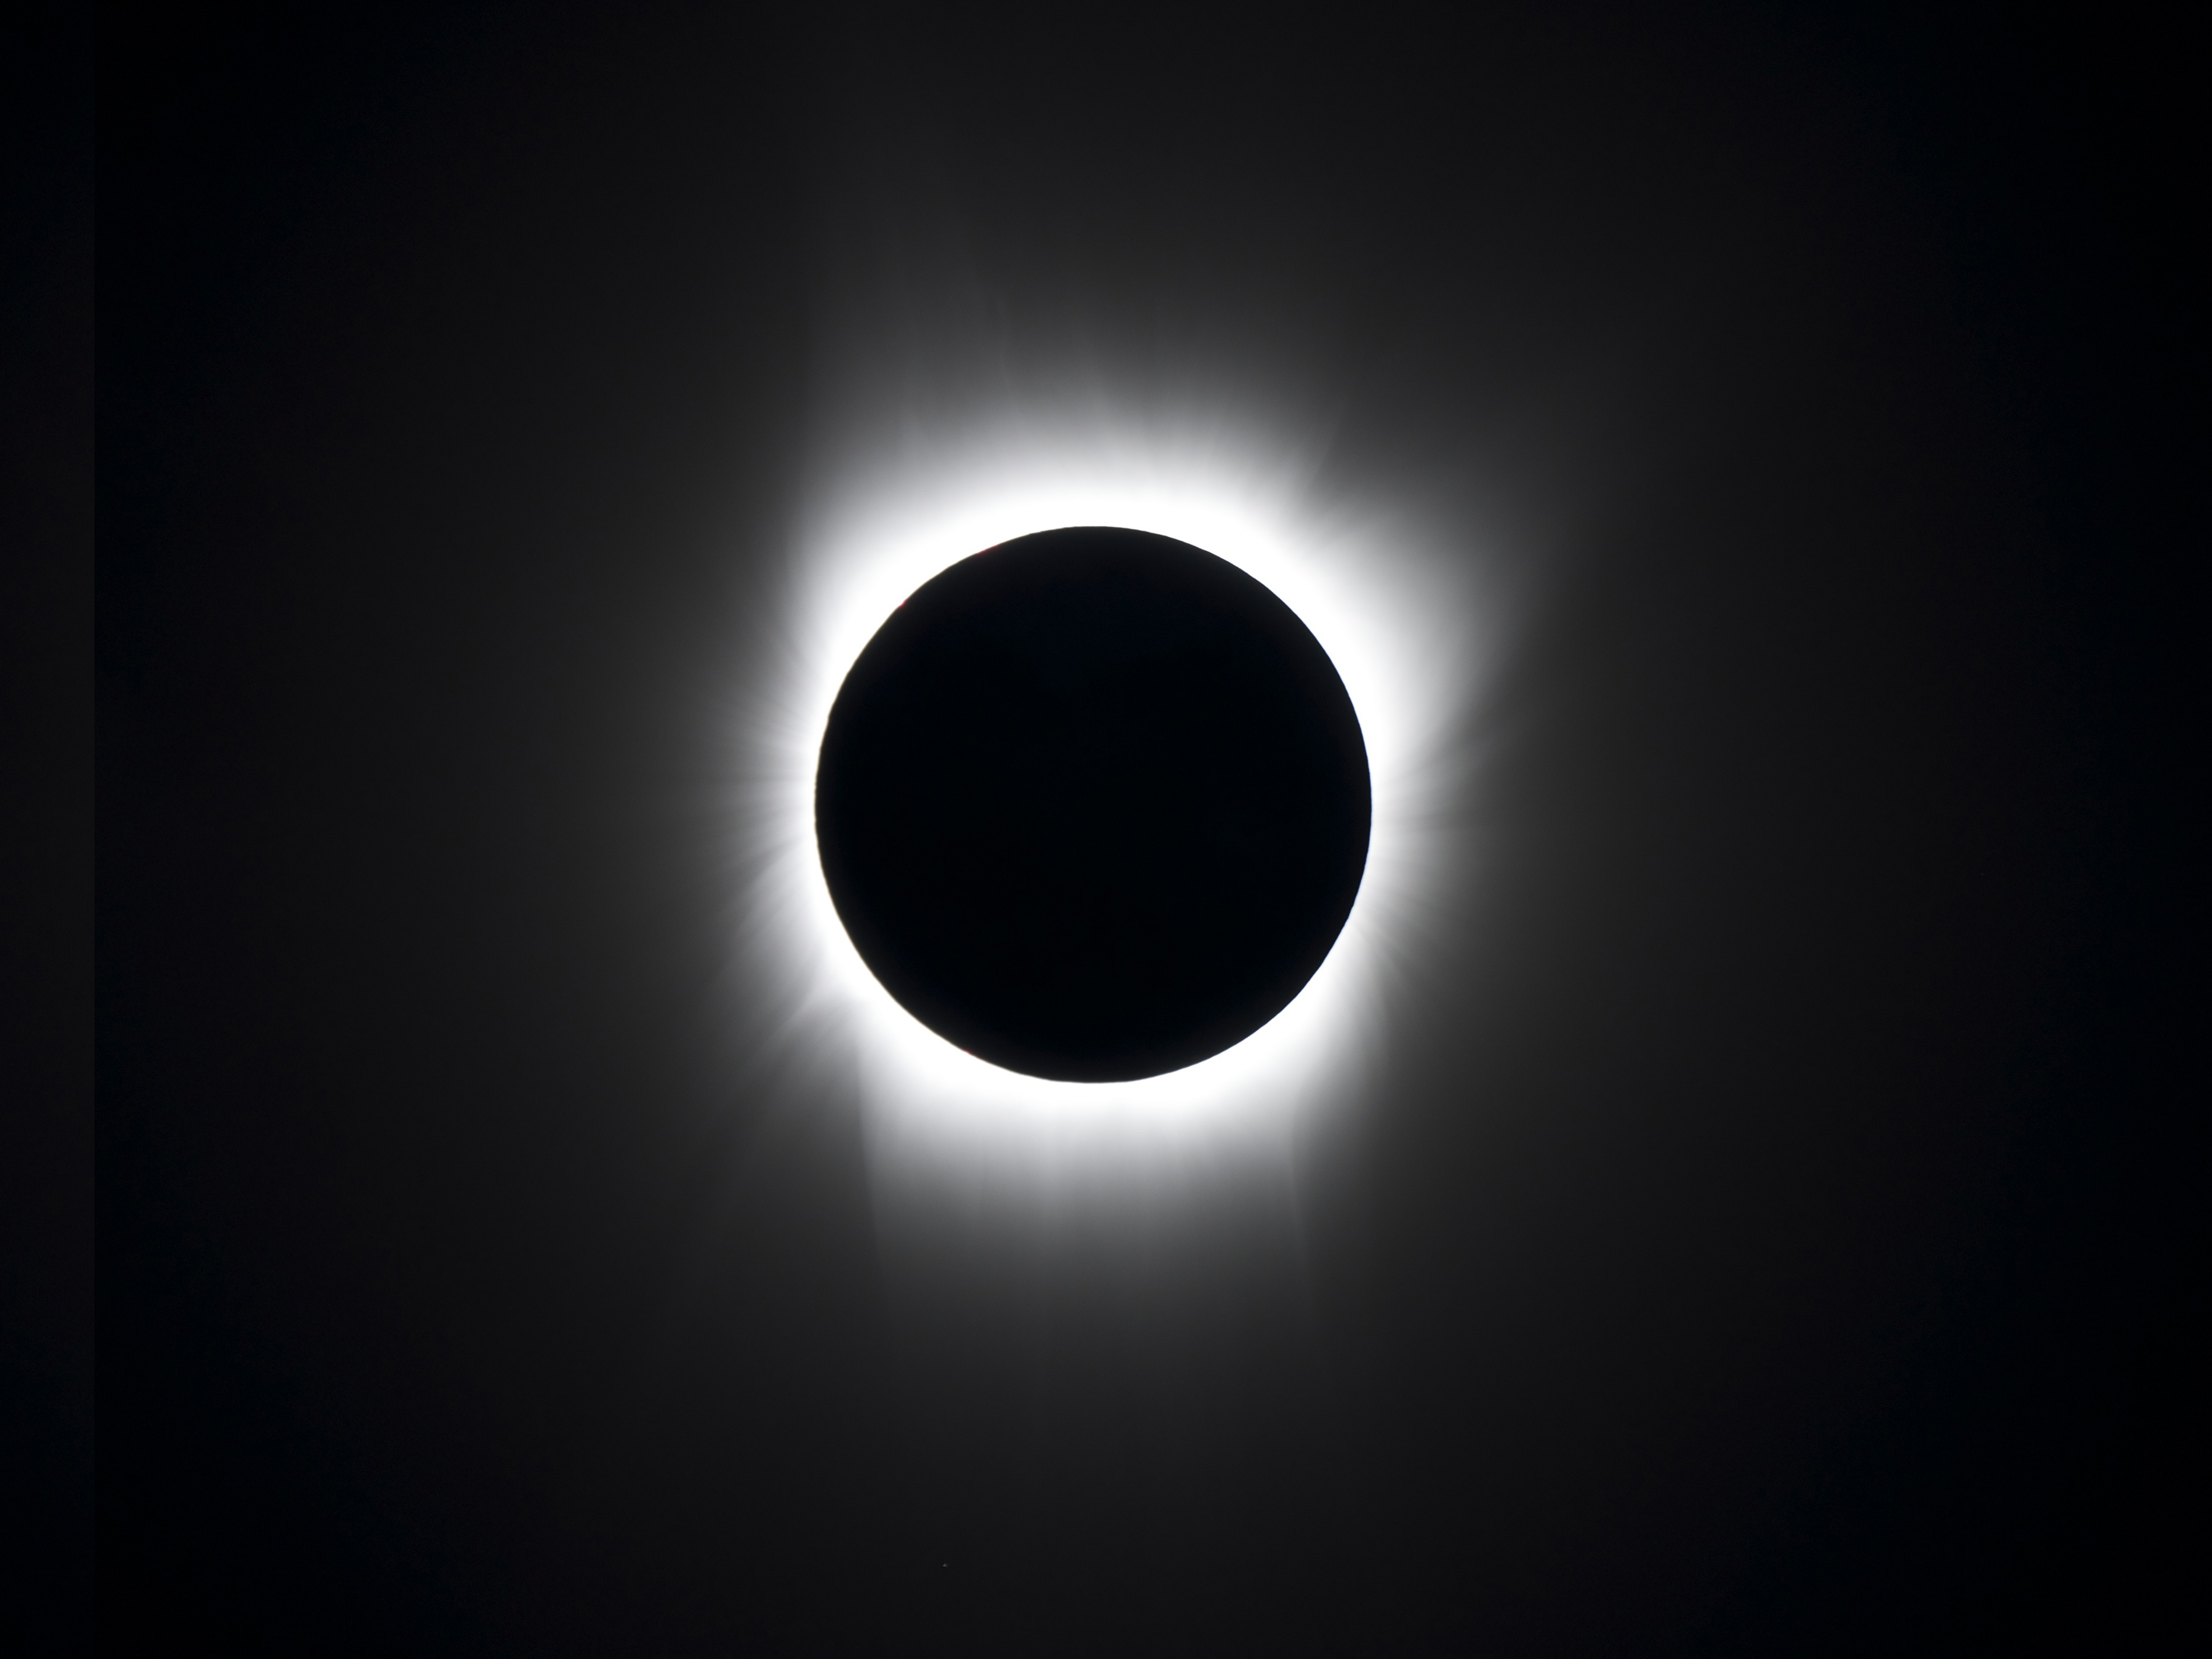 Image of a solar eclipse. source: Nasa.gov